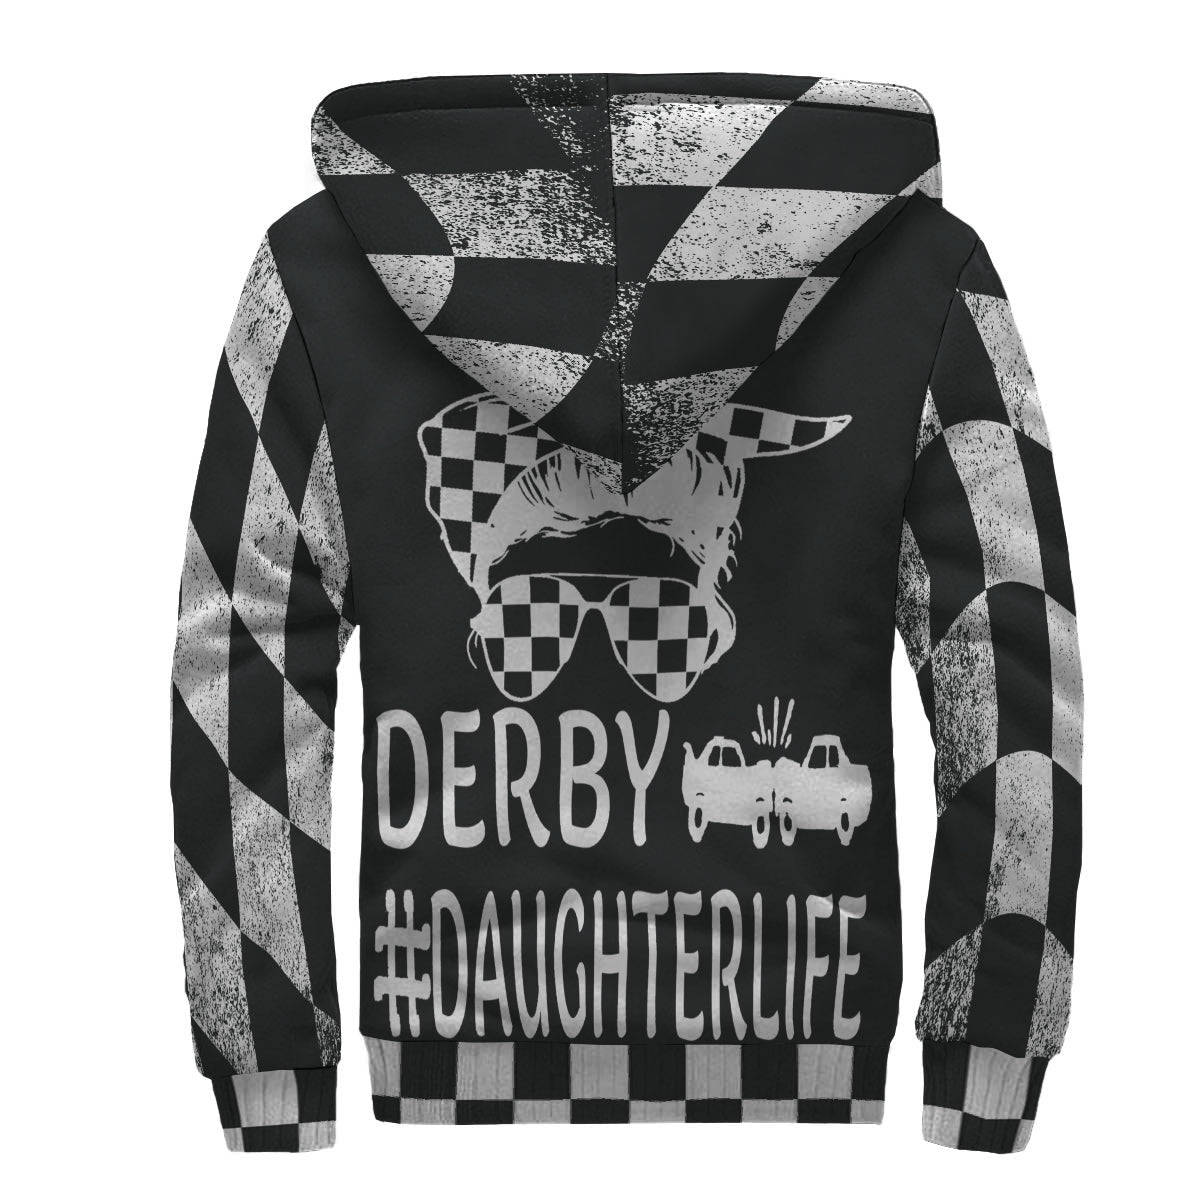 Demolition derby daughter jacket